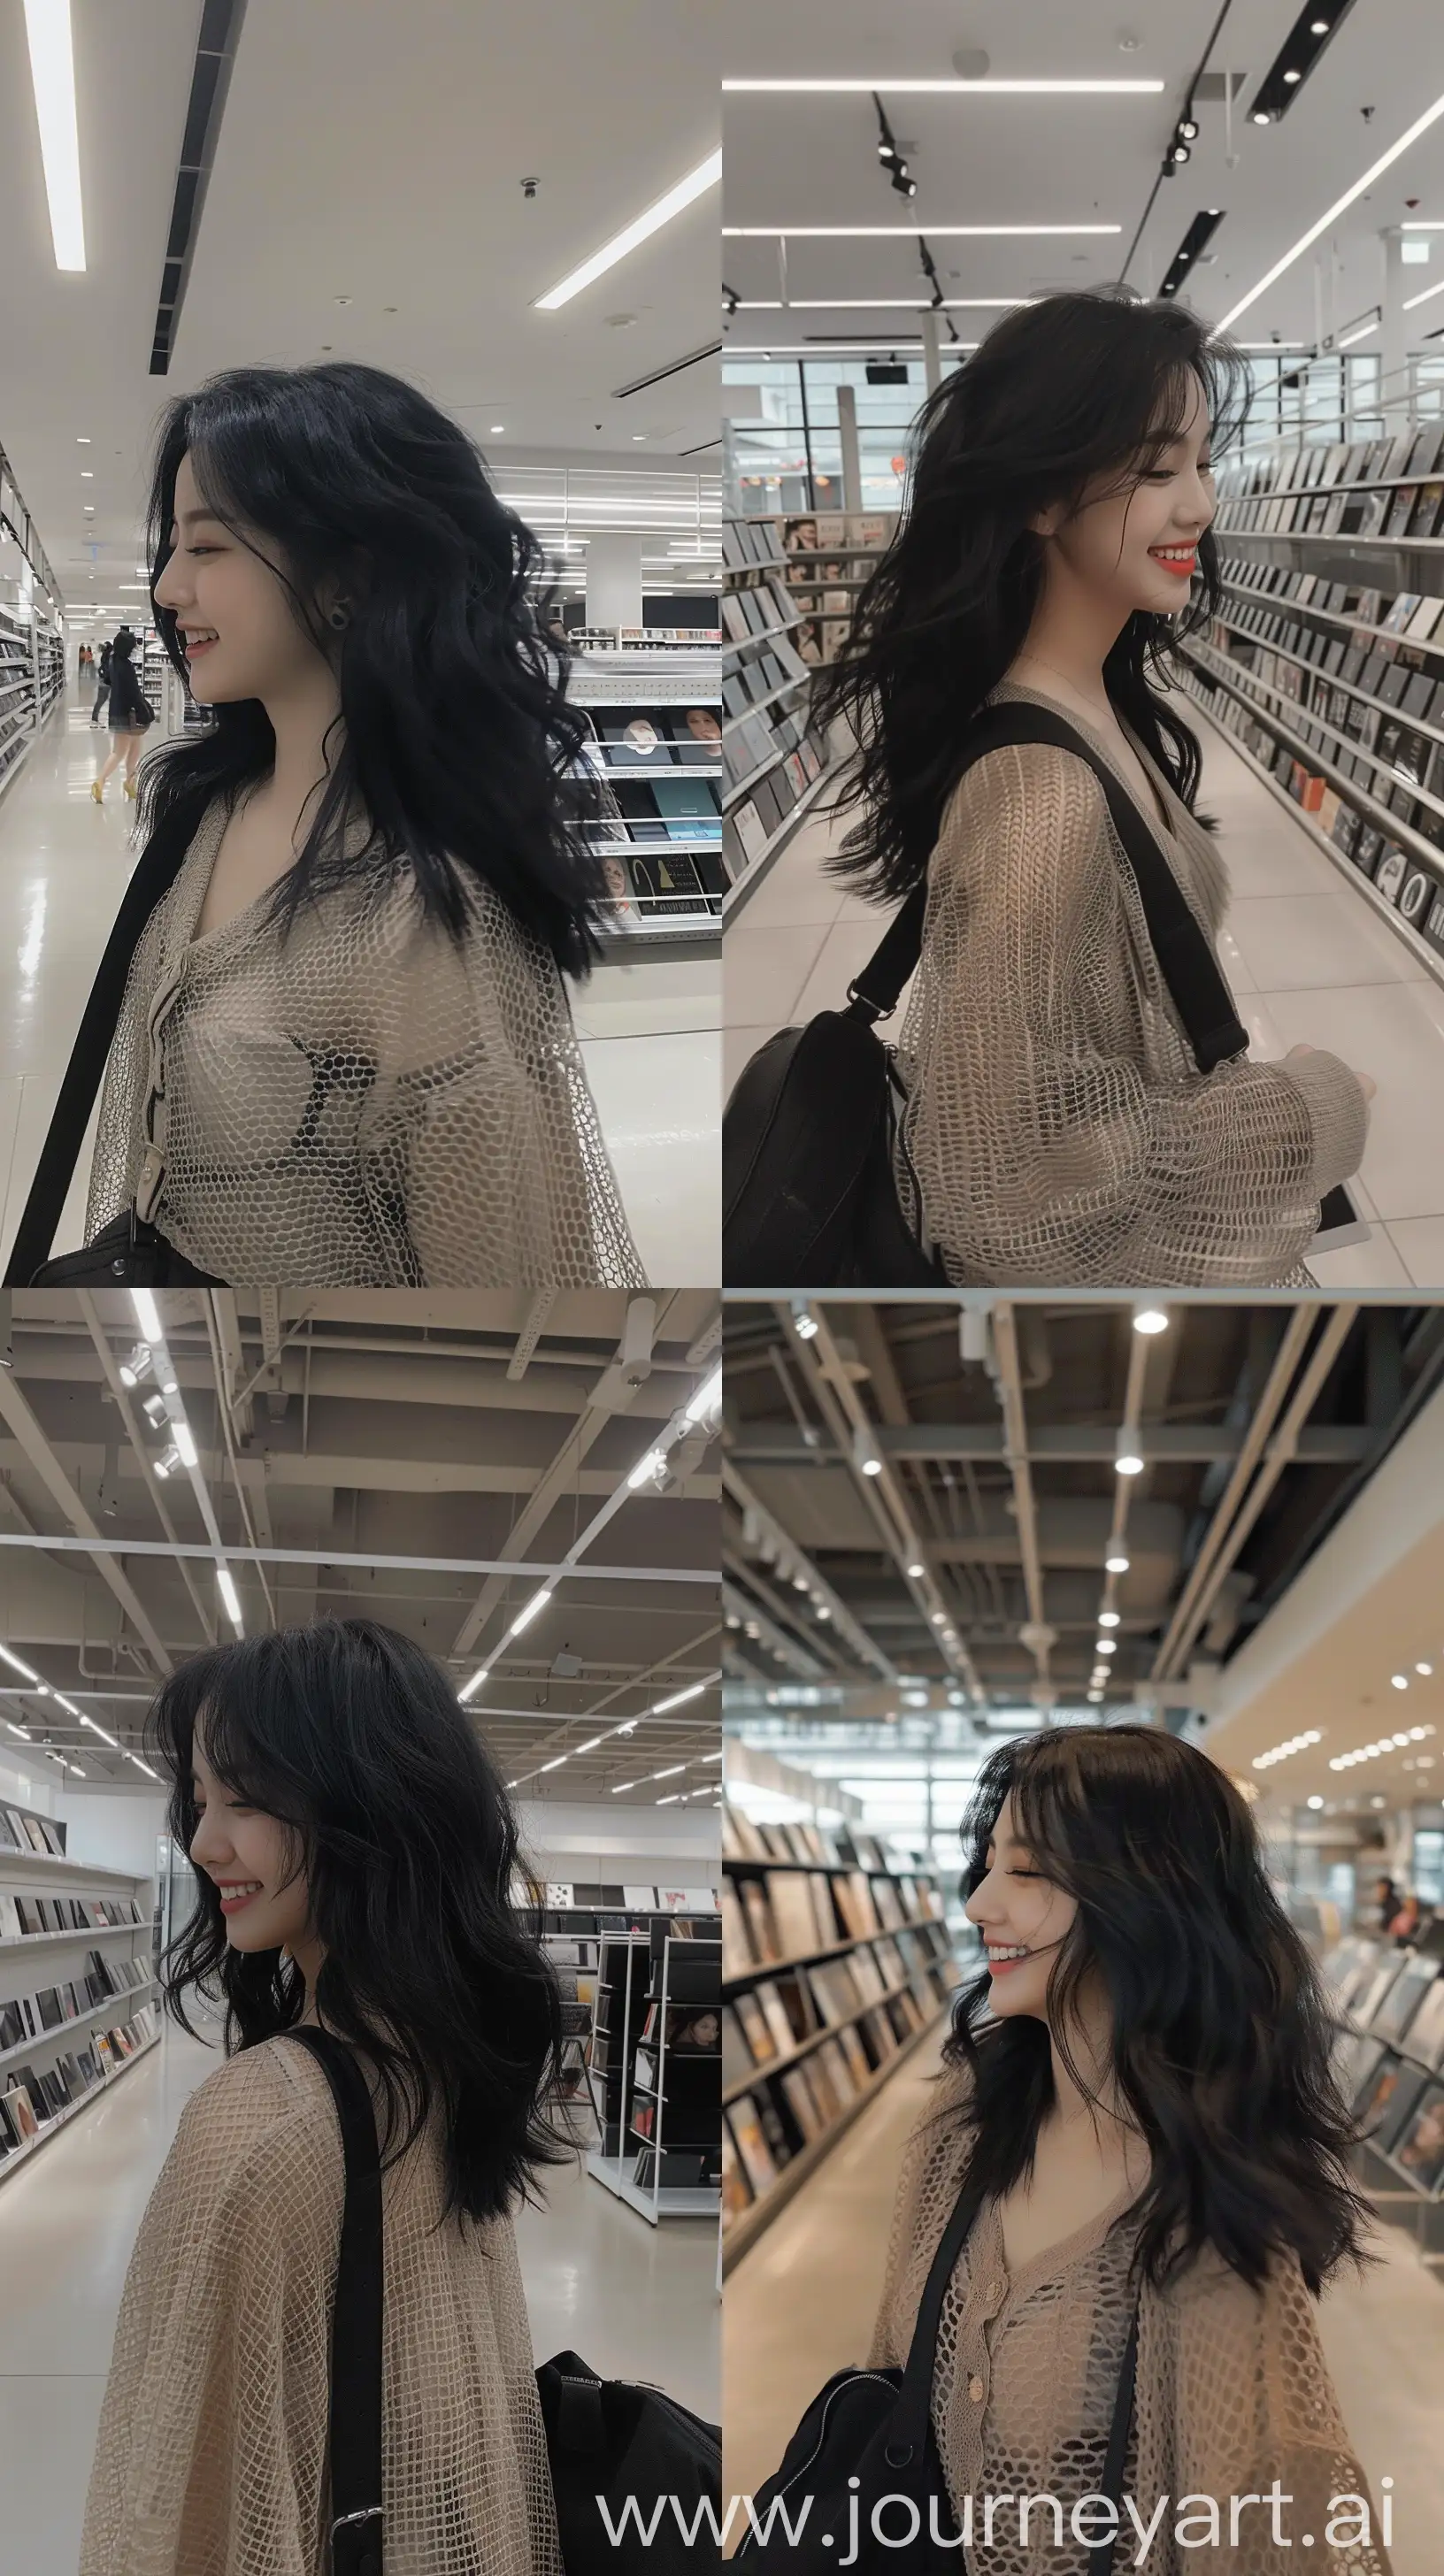 Blackpinks-Jennie-Smiling-in-Modern-Album-Store-Selfie